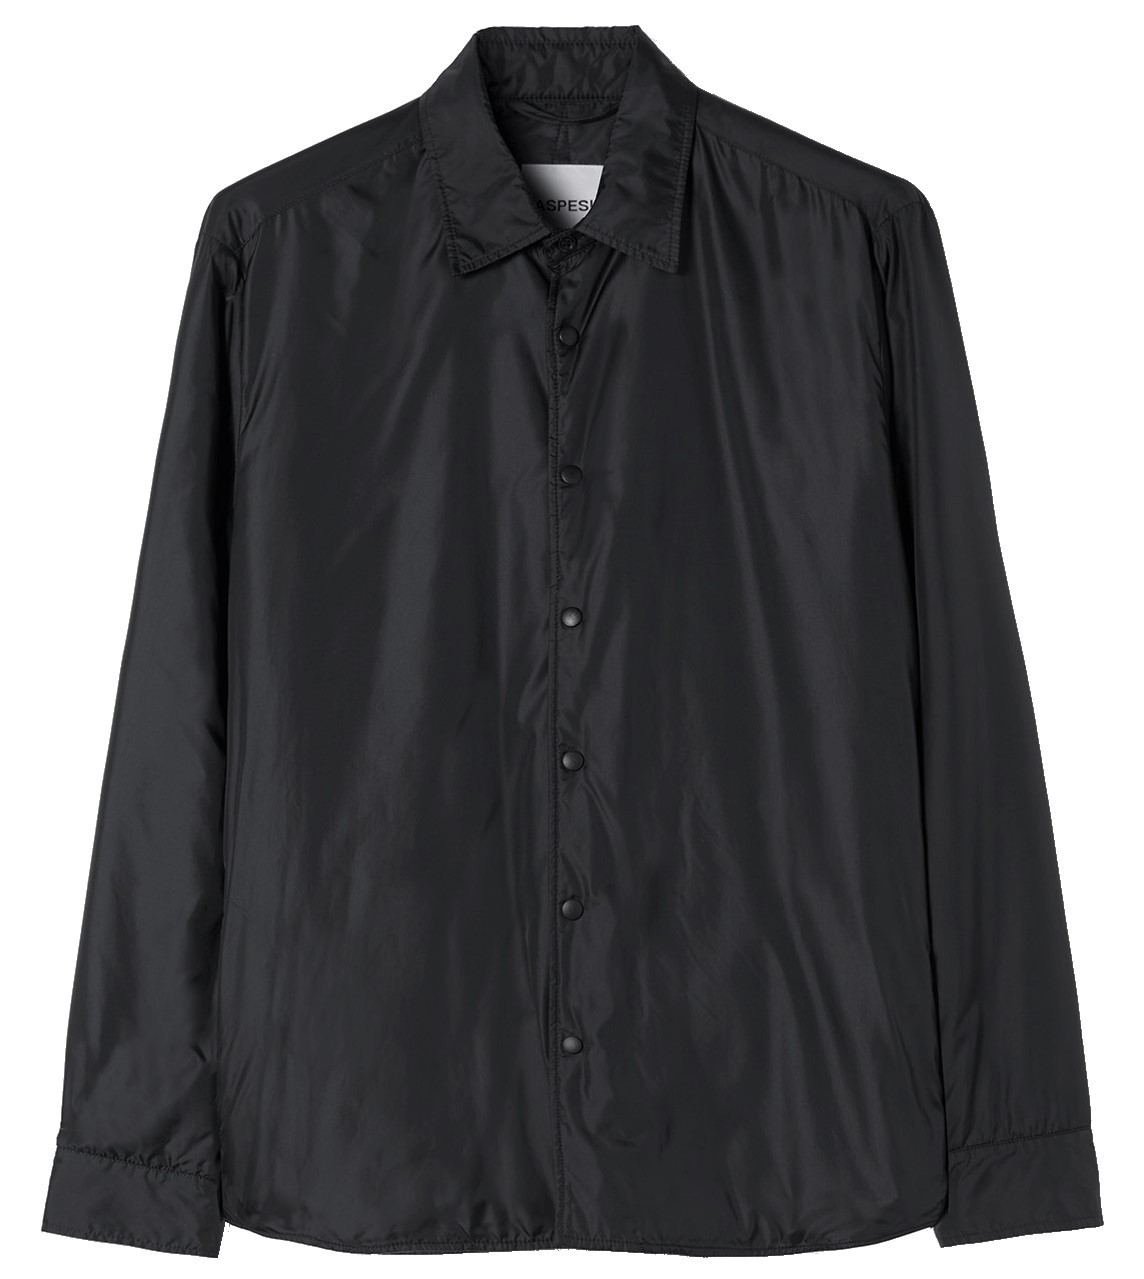 Aspesi Nylon Overshirt in Black S